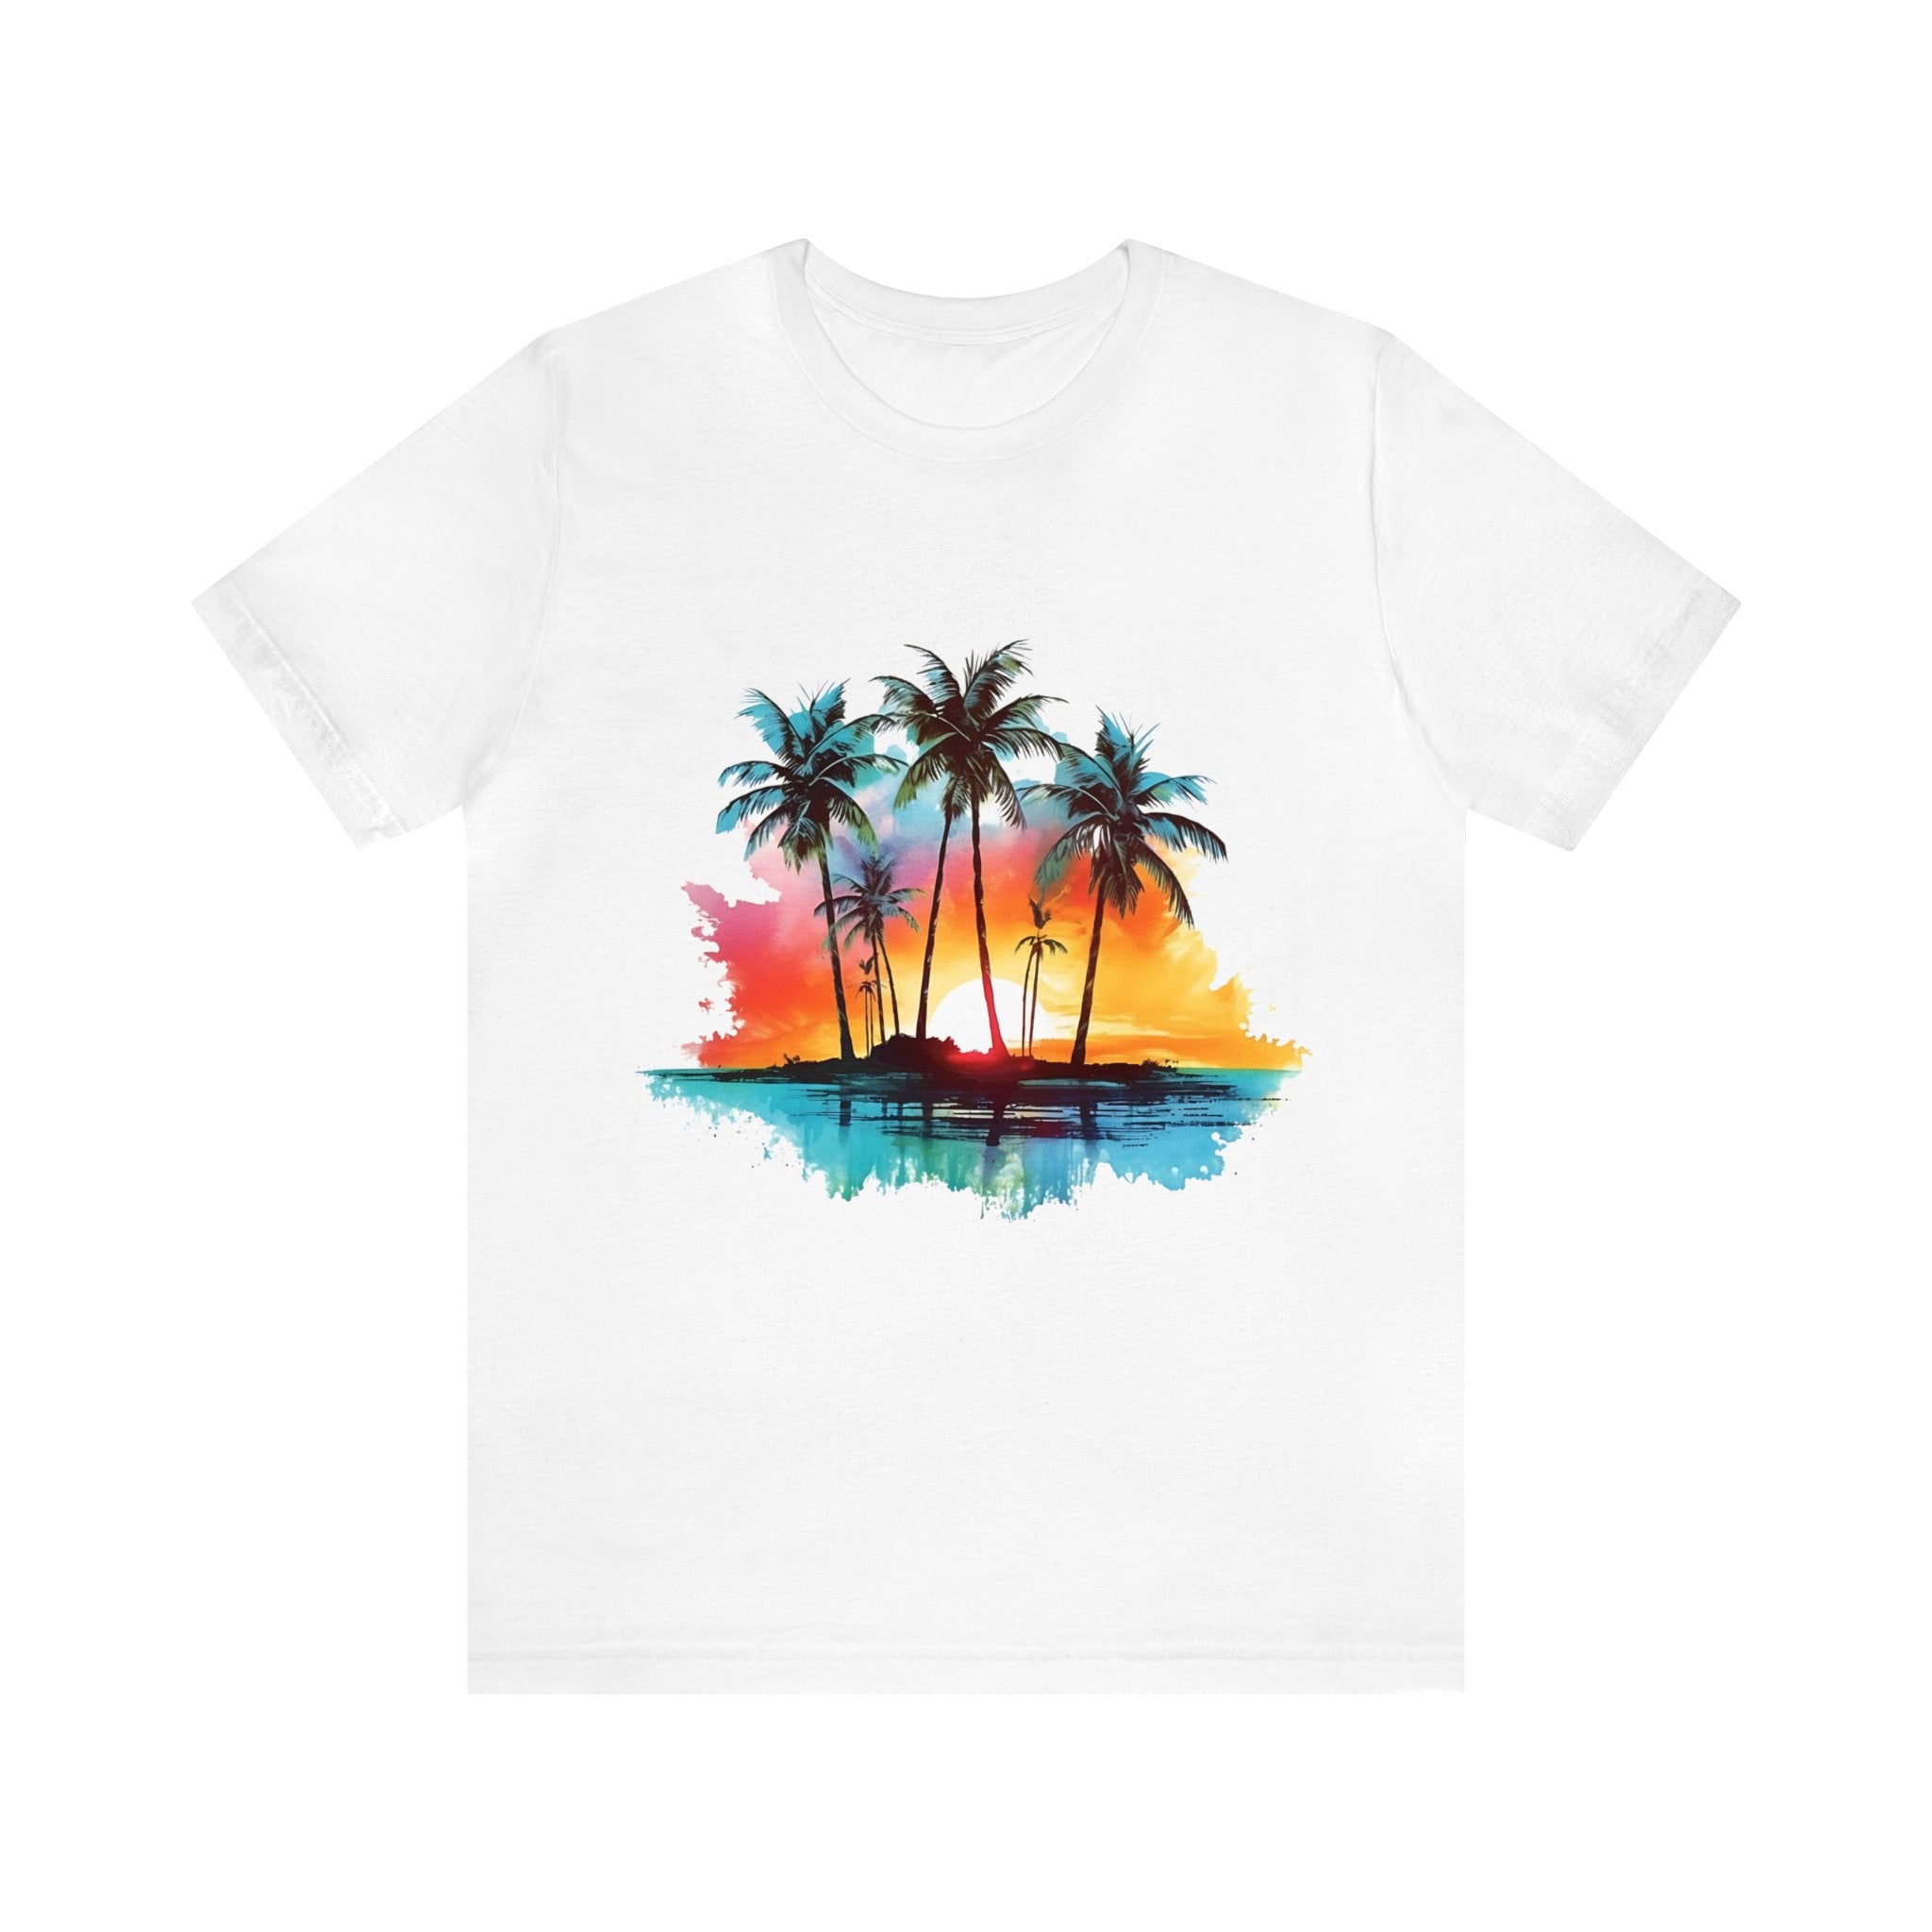 Retro 80s Vintage Palm Tree Summer Beach